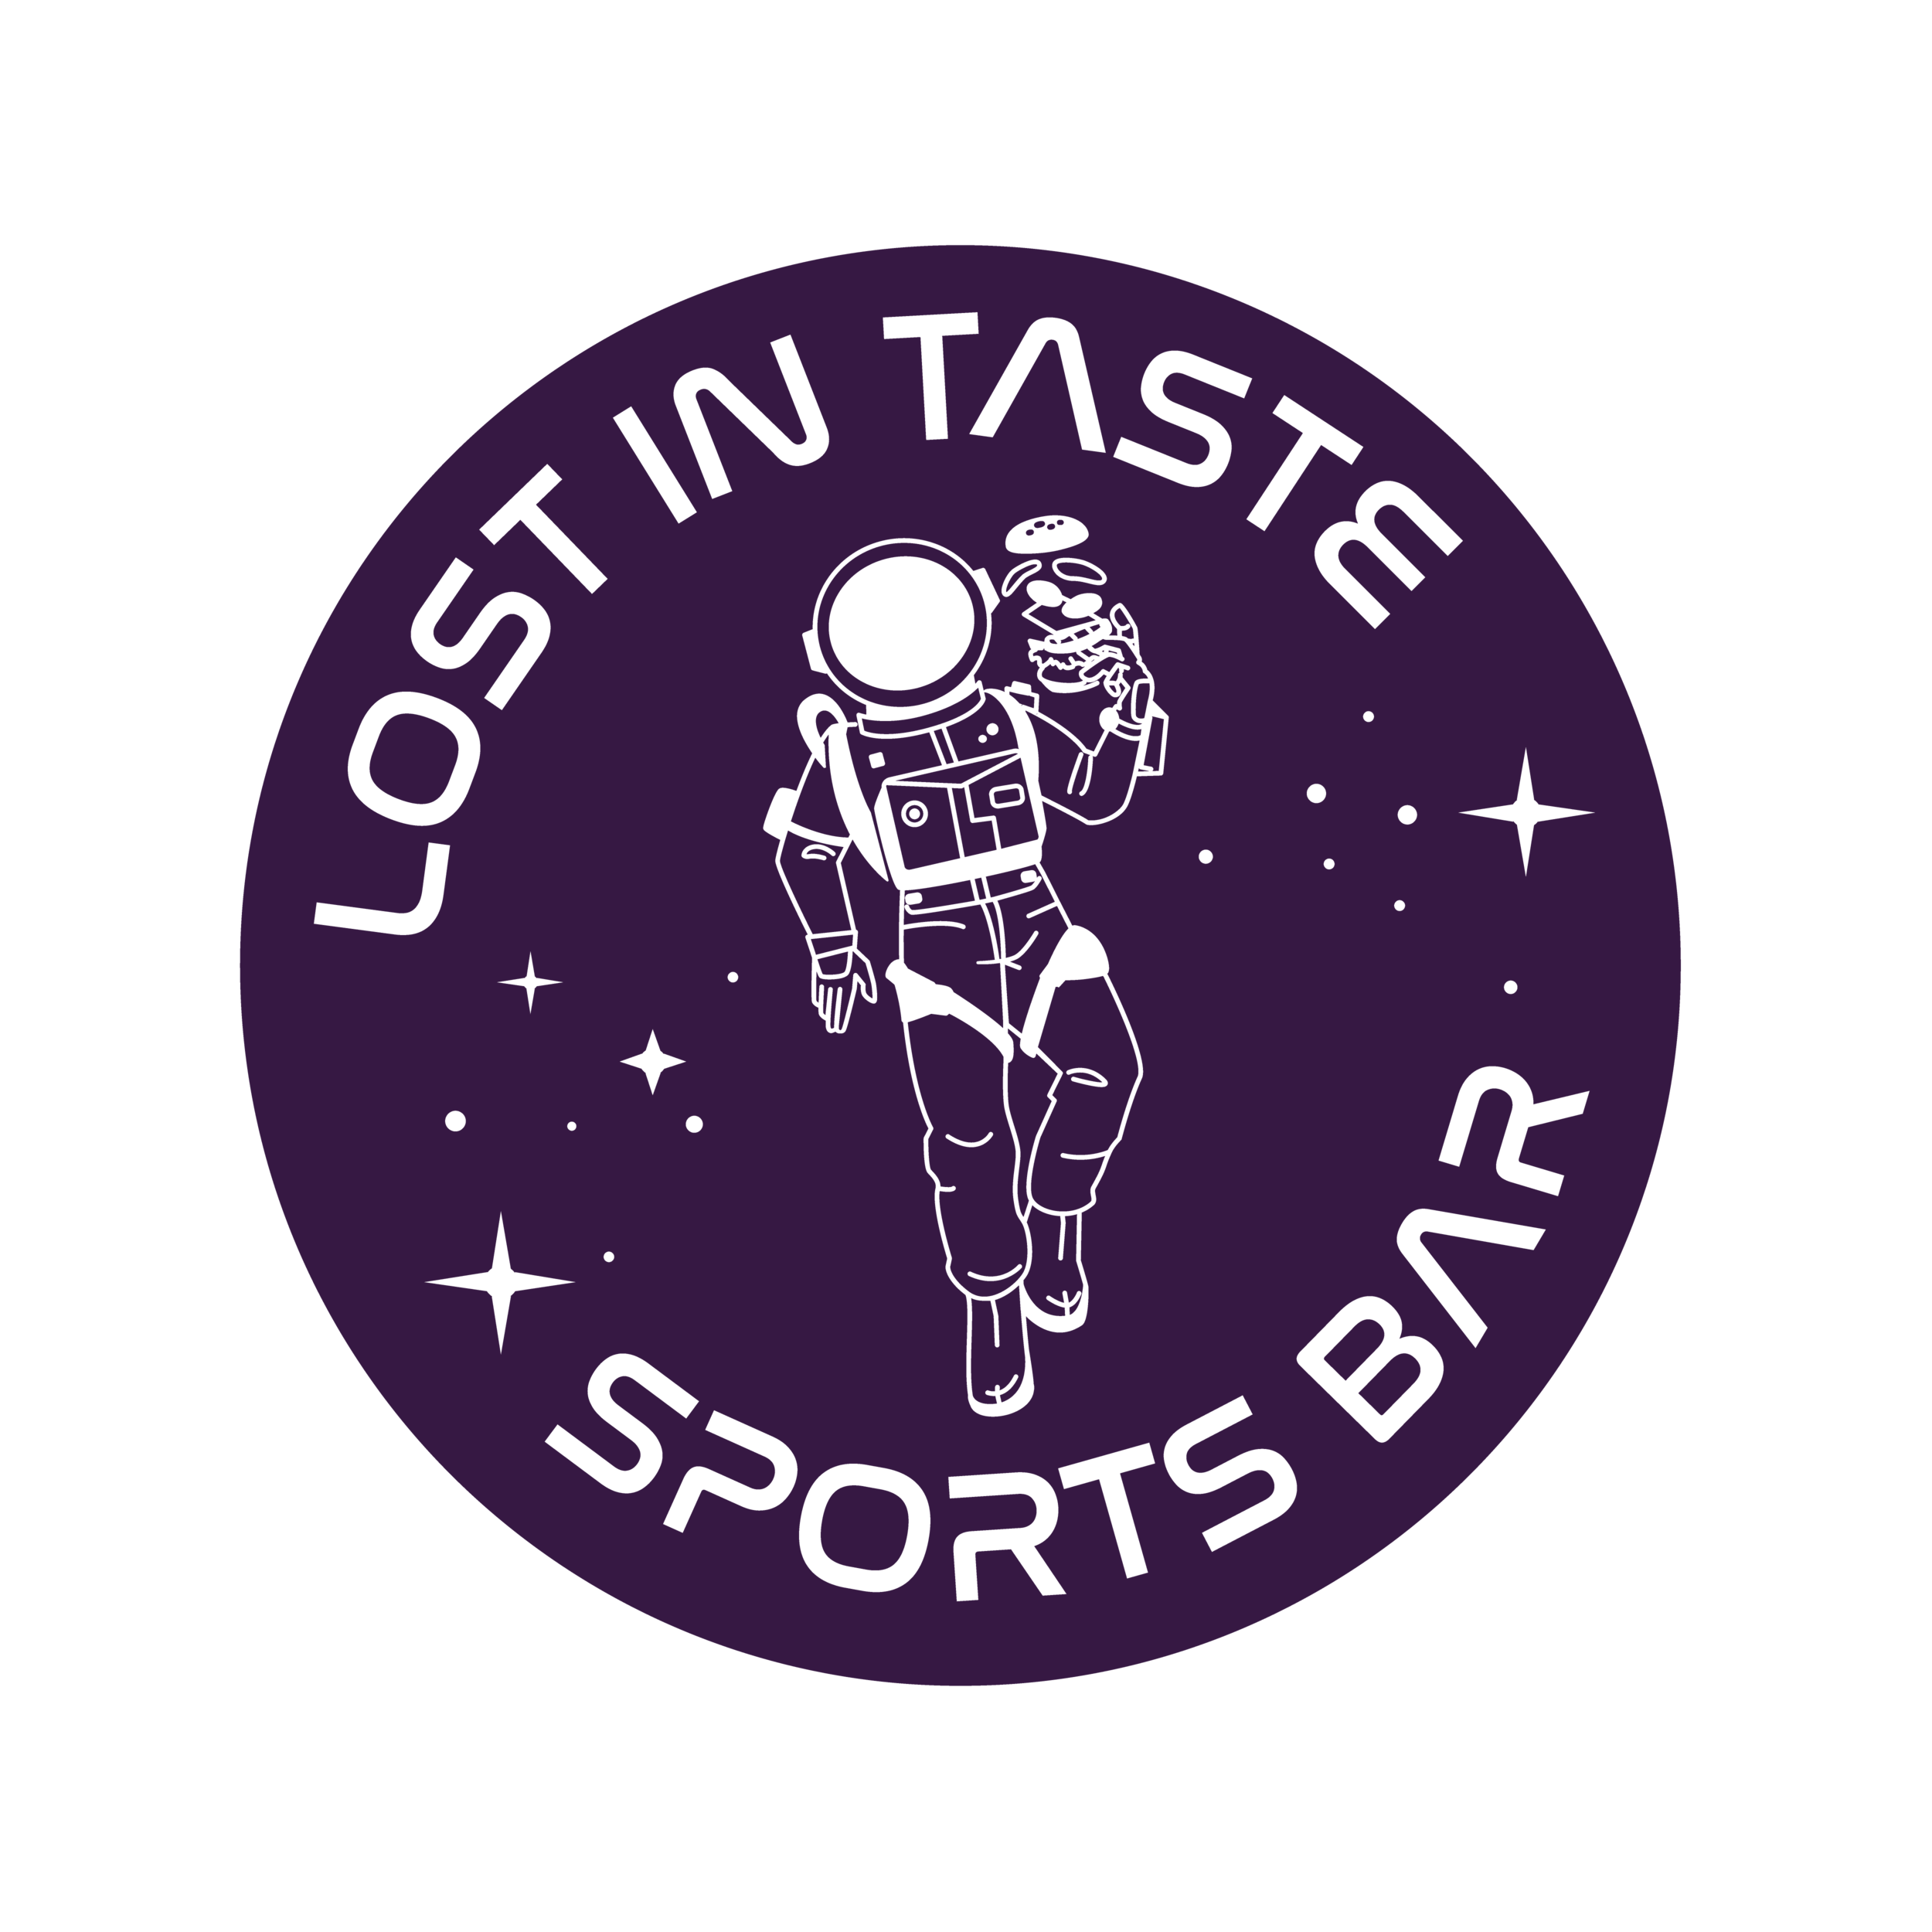 Lost in Taste Logo and Branding Design_Badge Whole Transparent Filled Purple.png